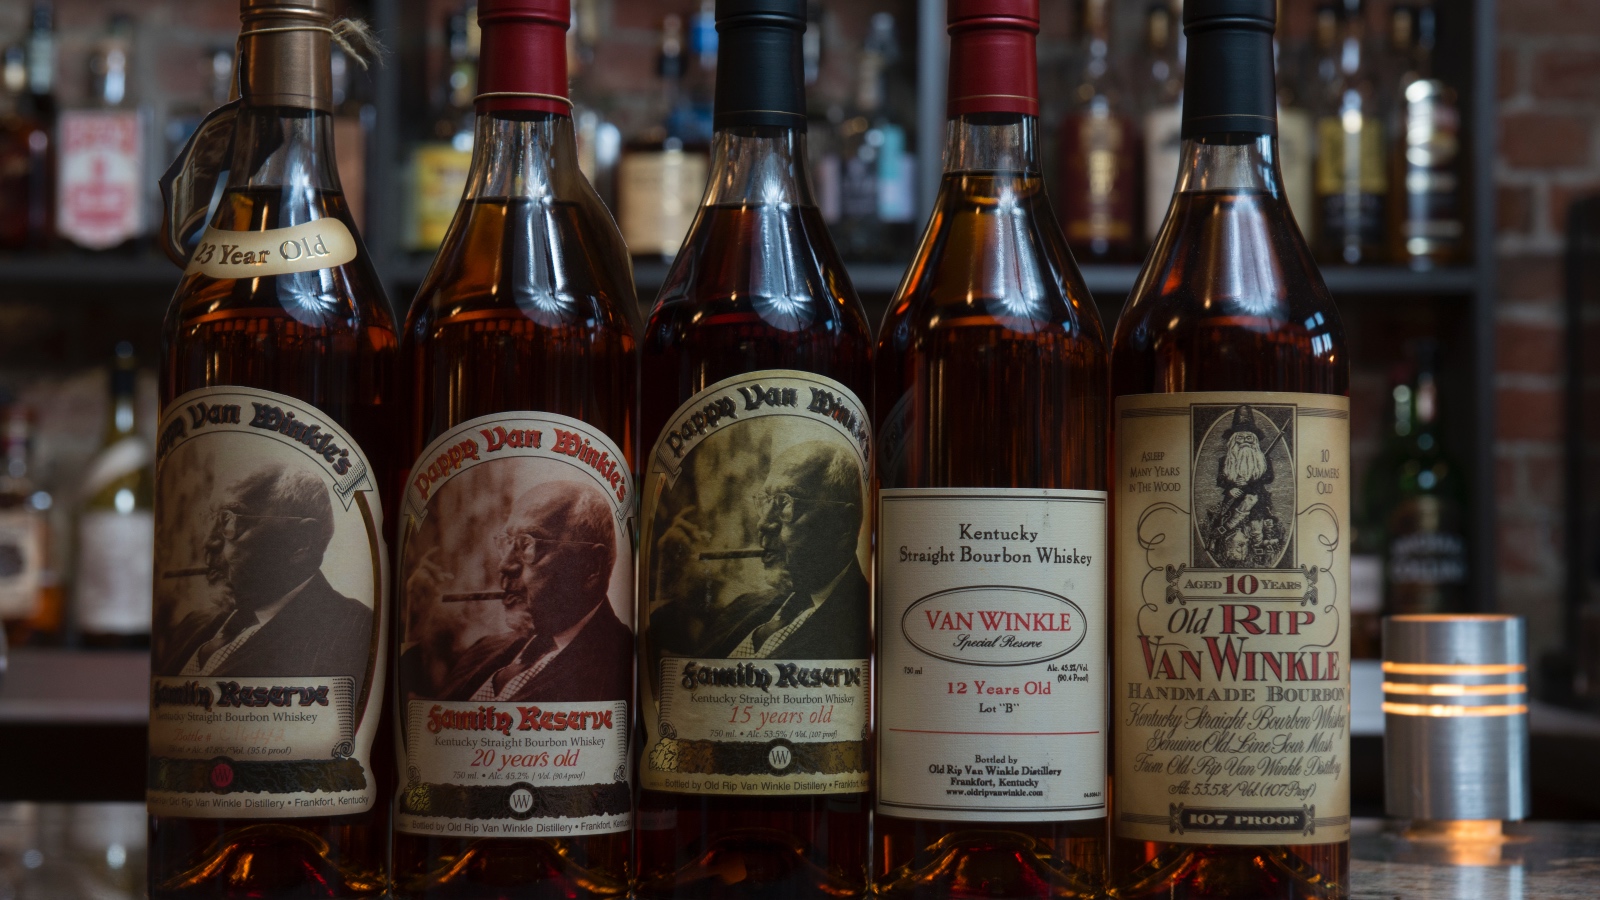 collection of Pappy Van Winkle bourbon bottles